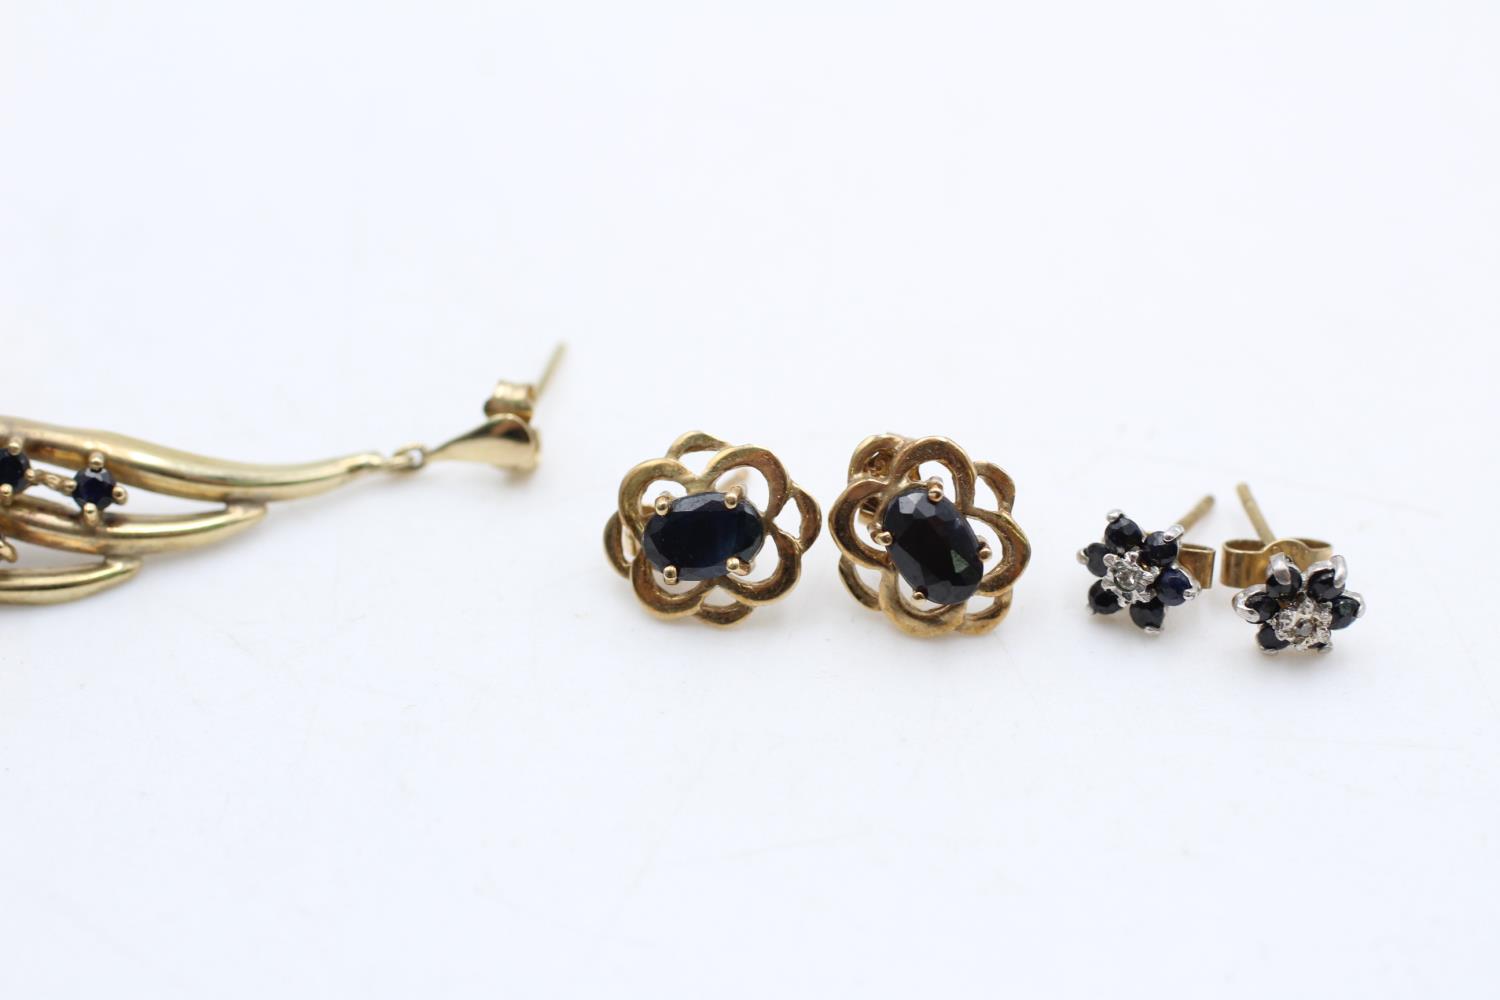 2 x 9ct gold sapphire & diamond earrings (3.4g) - Image 4 of 5